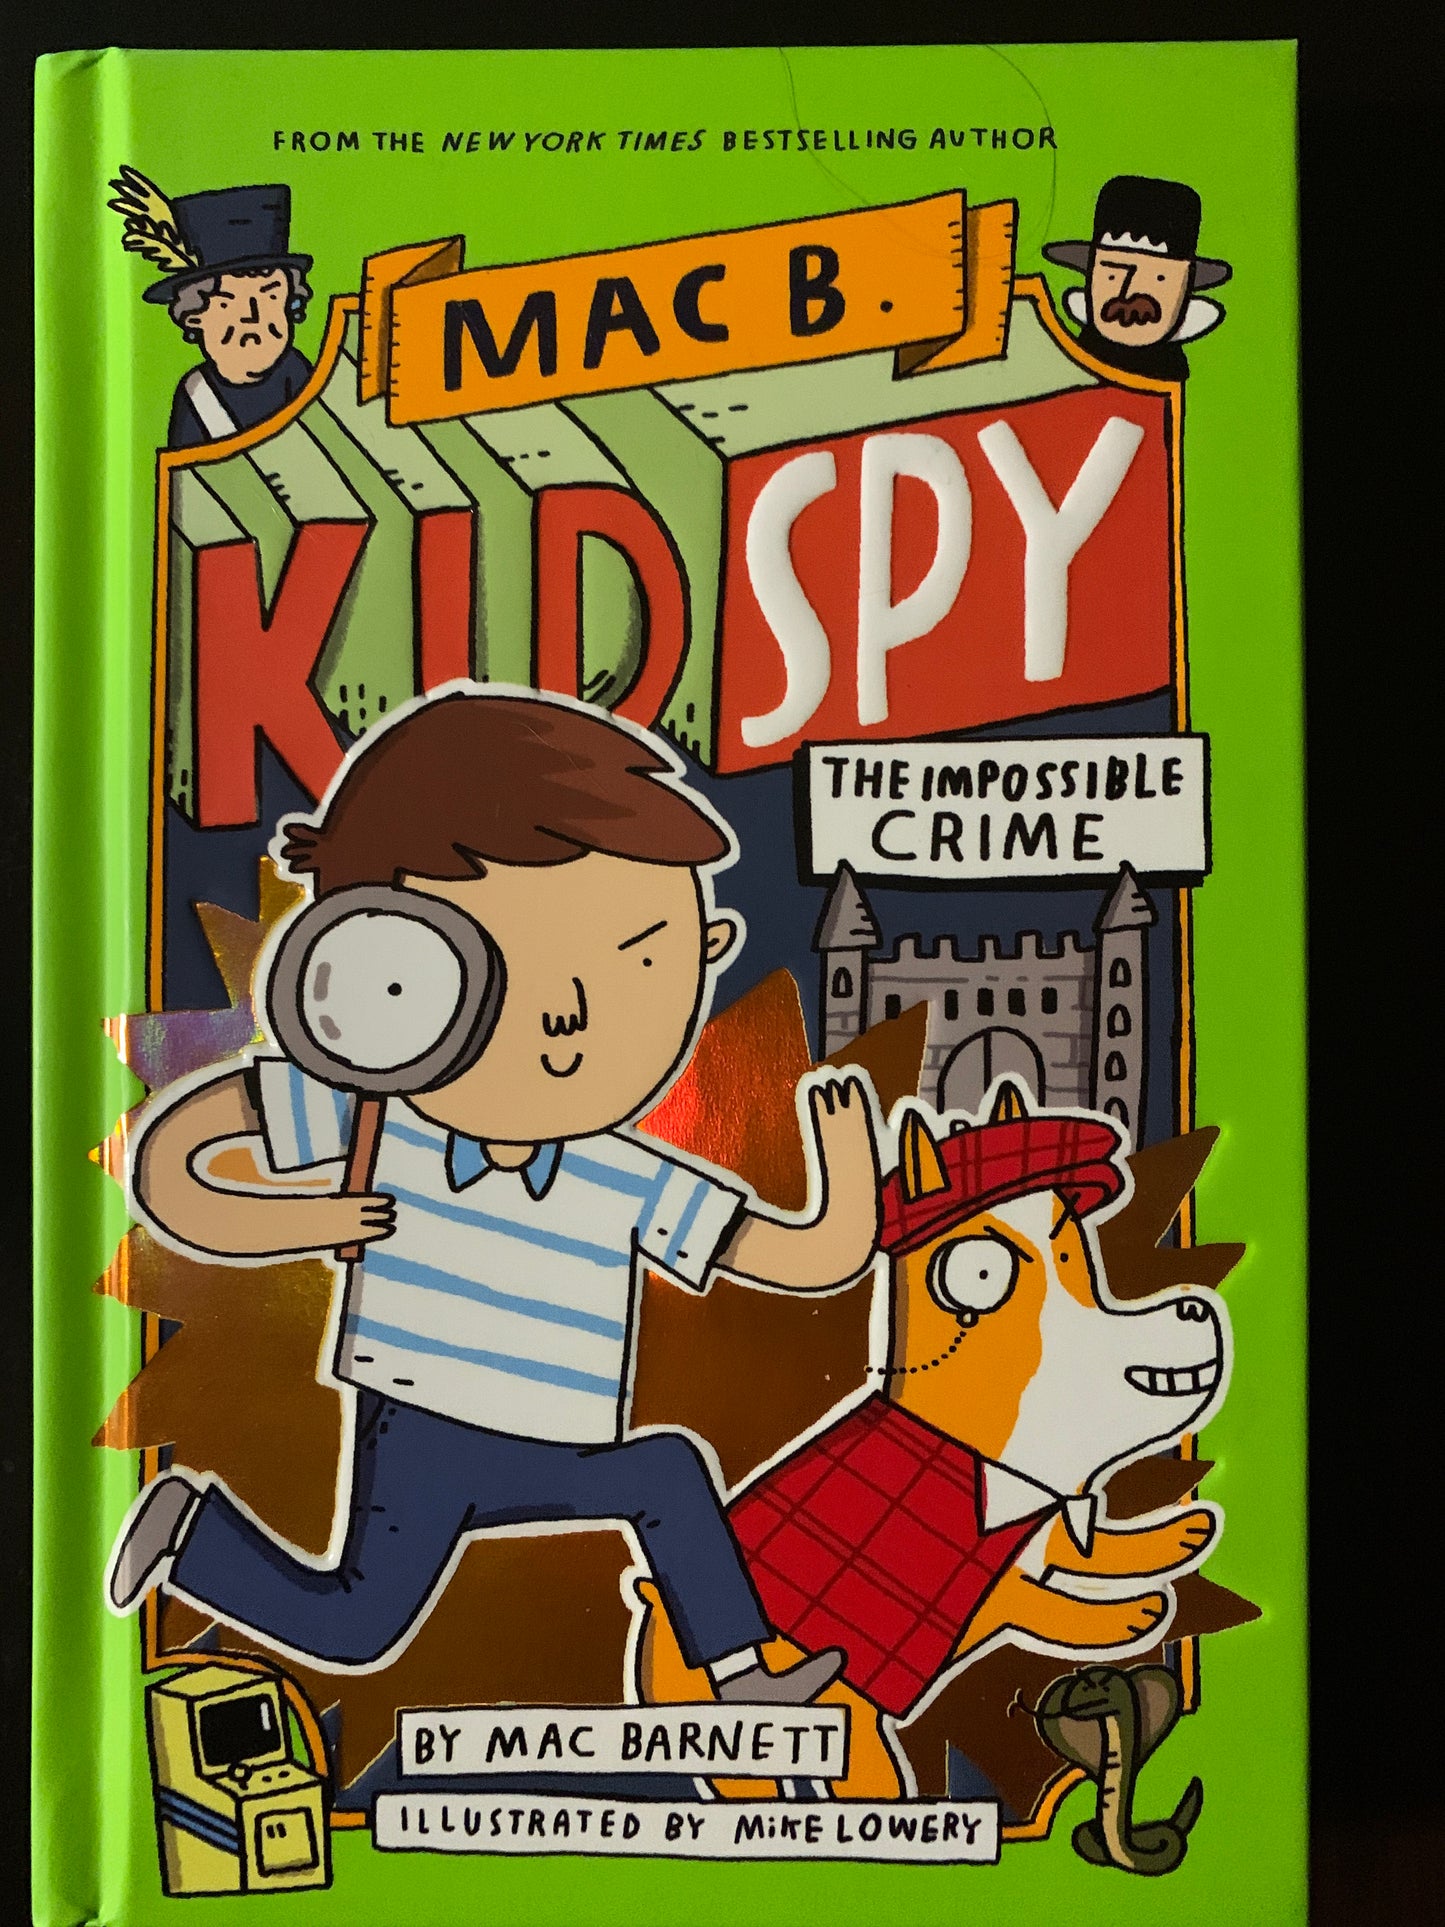 Mac B. Kid Spy: The Impossible Crime (#2)